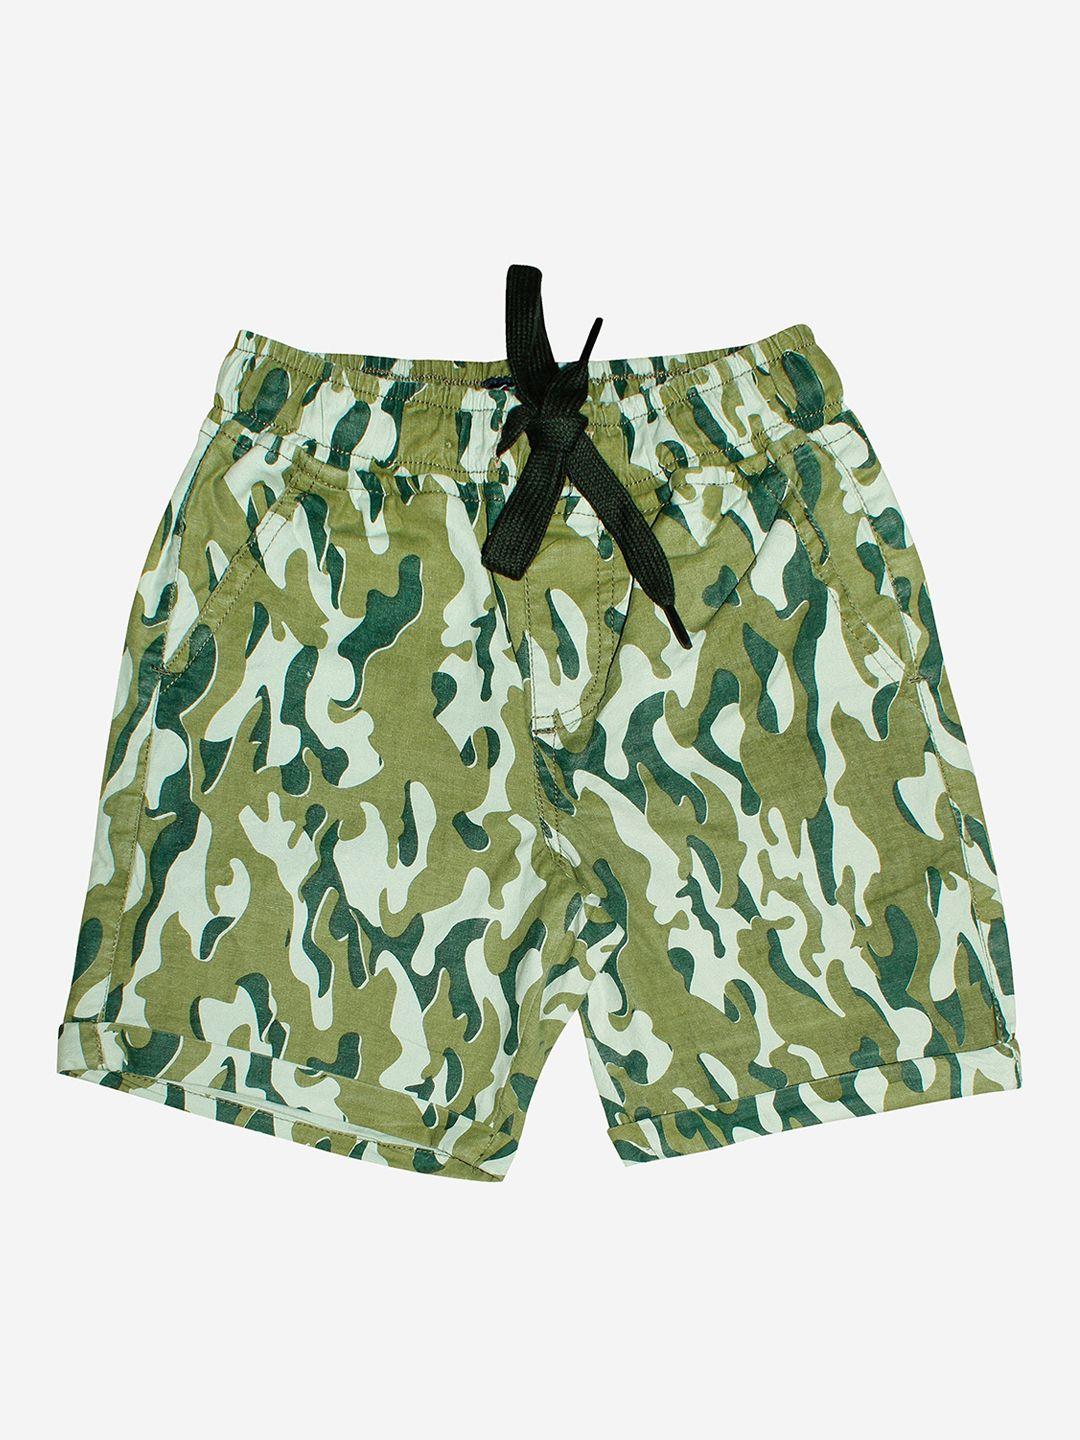 kiddopanti boys green camouflage printed shorts